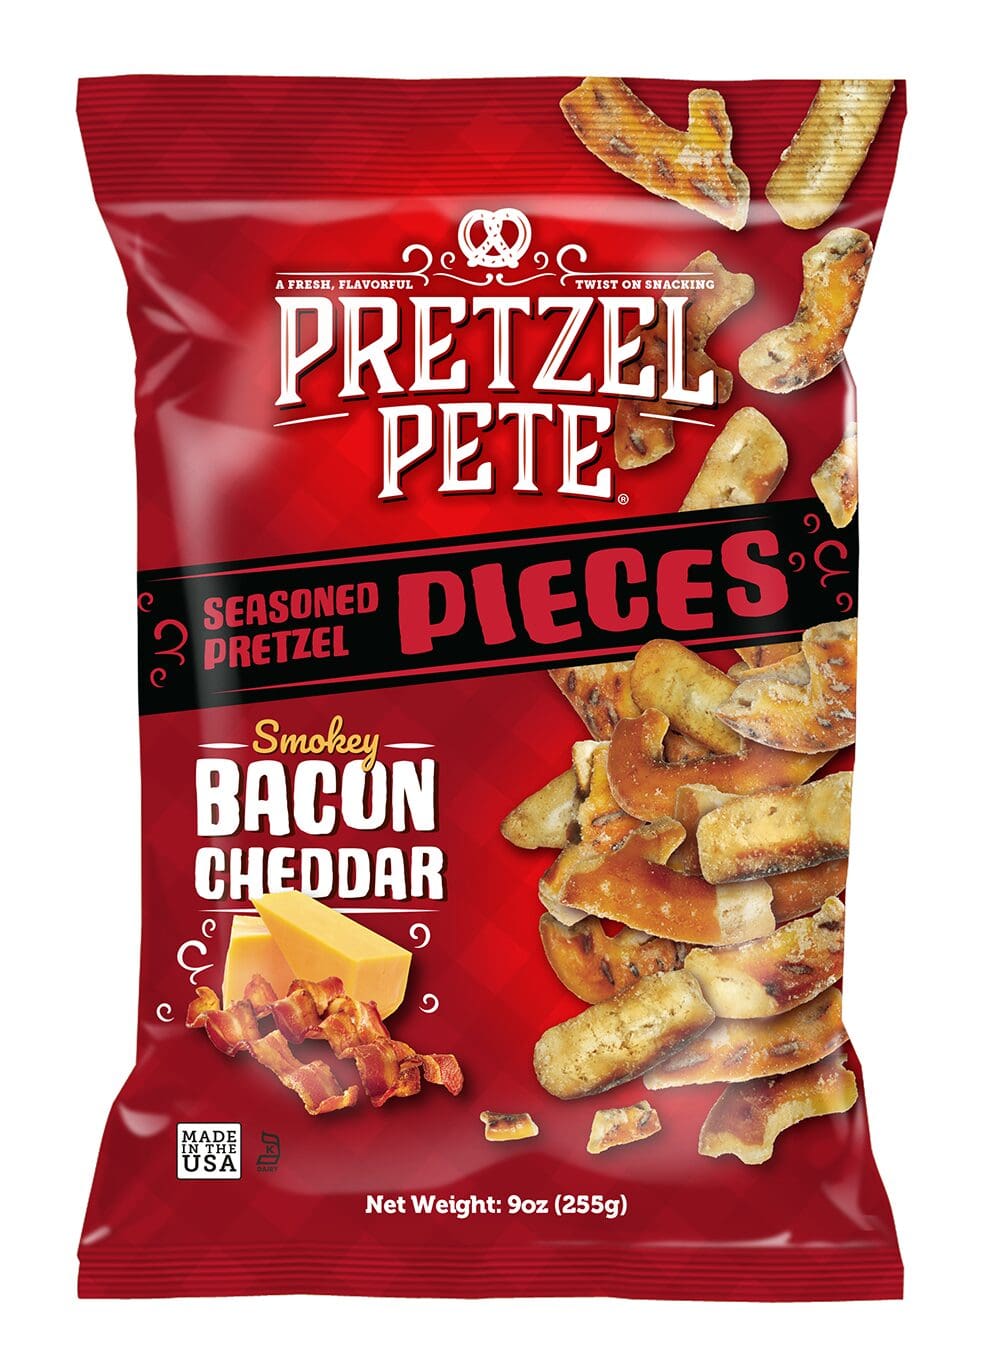 Pretzelmaker releases bacon stuffed bites, 2018-09-19